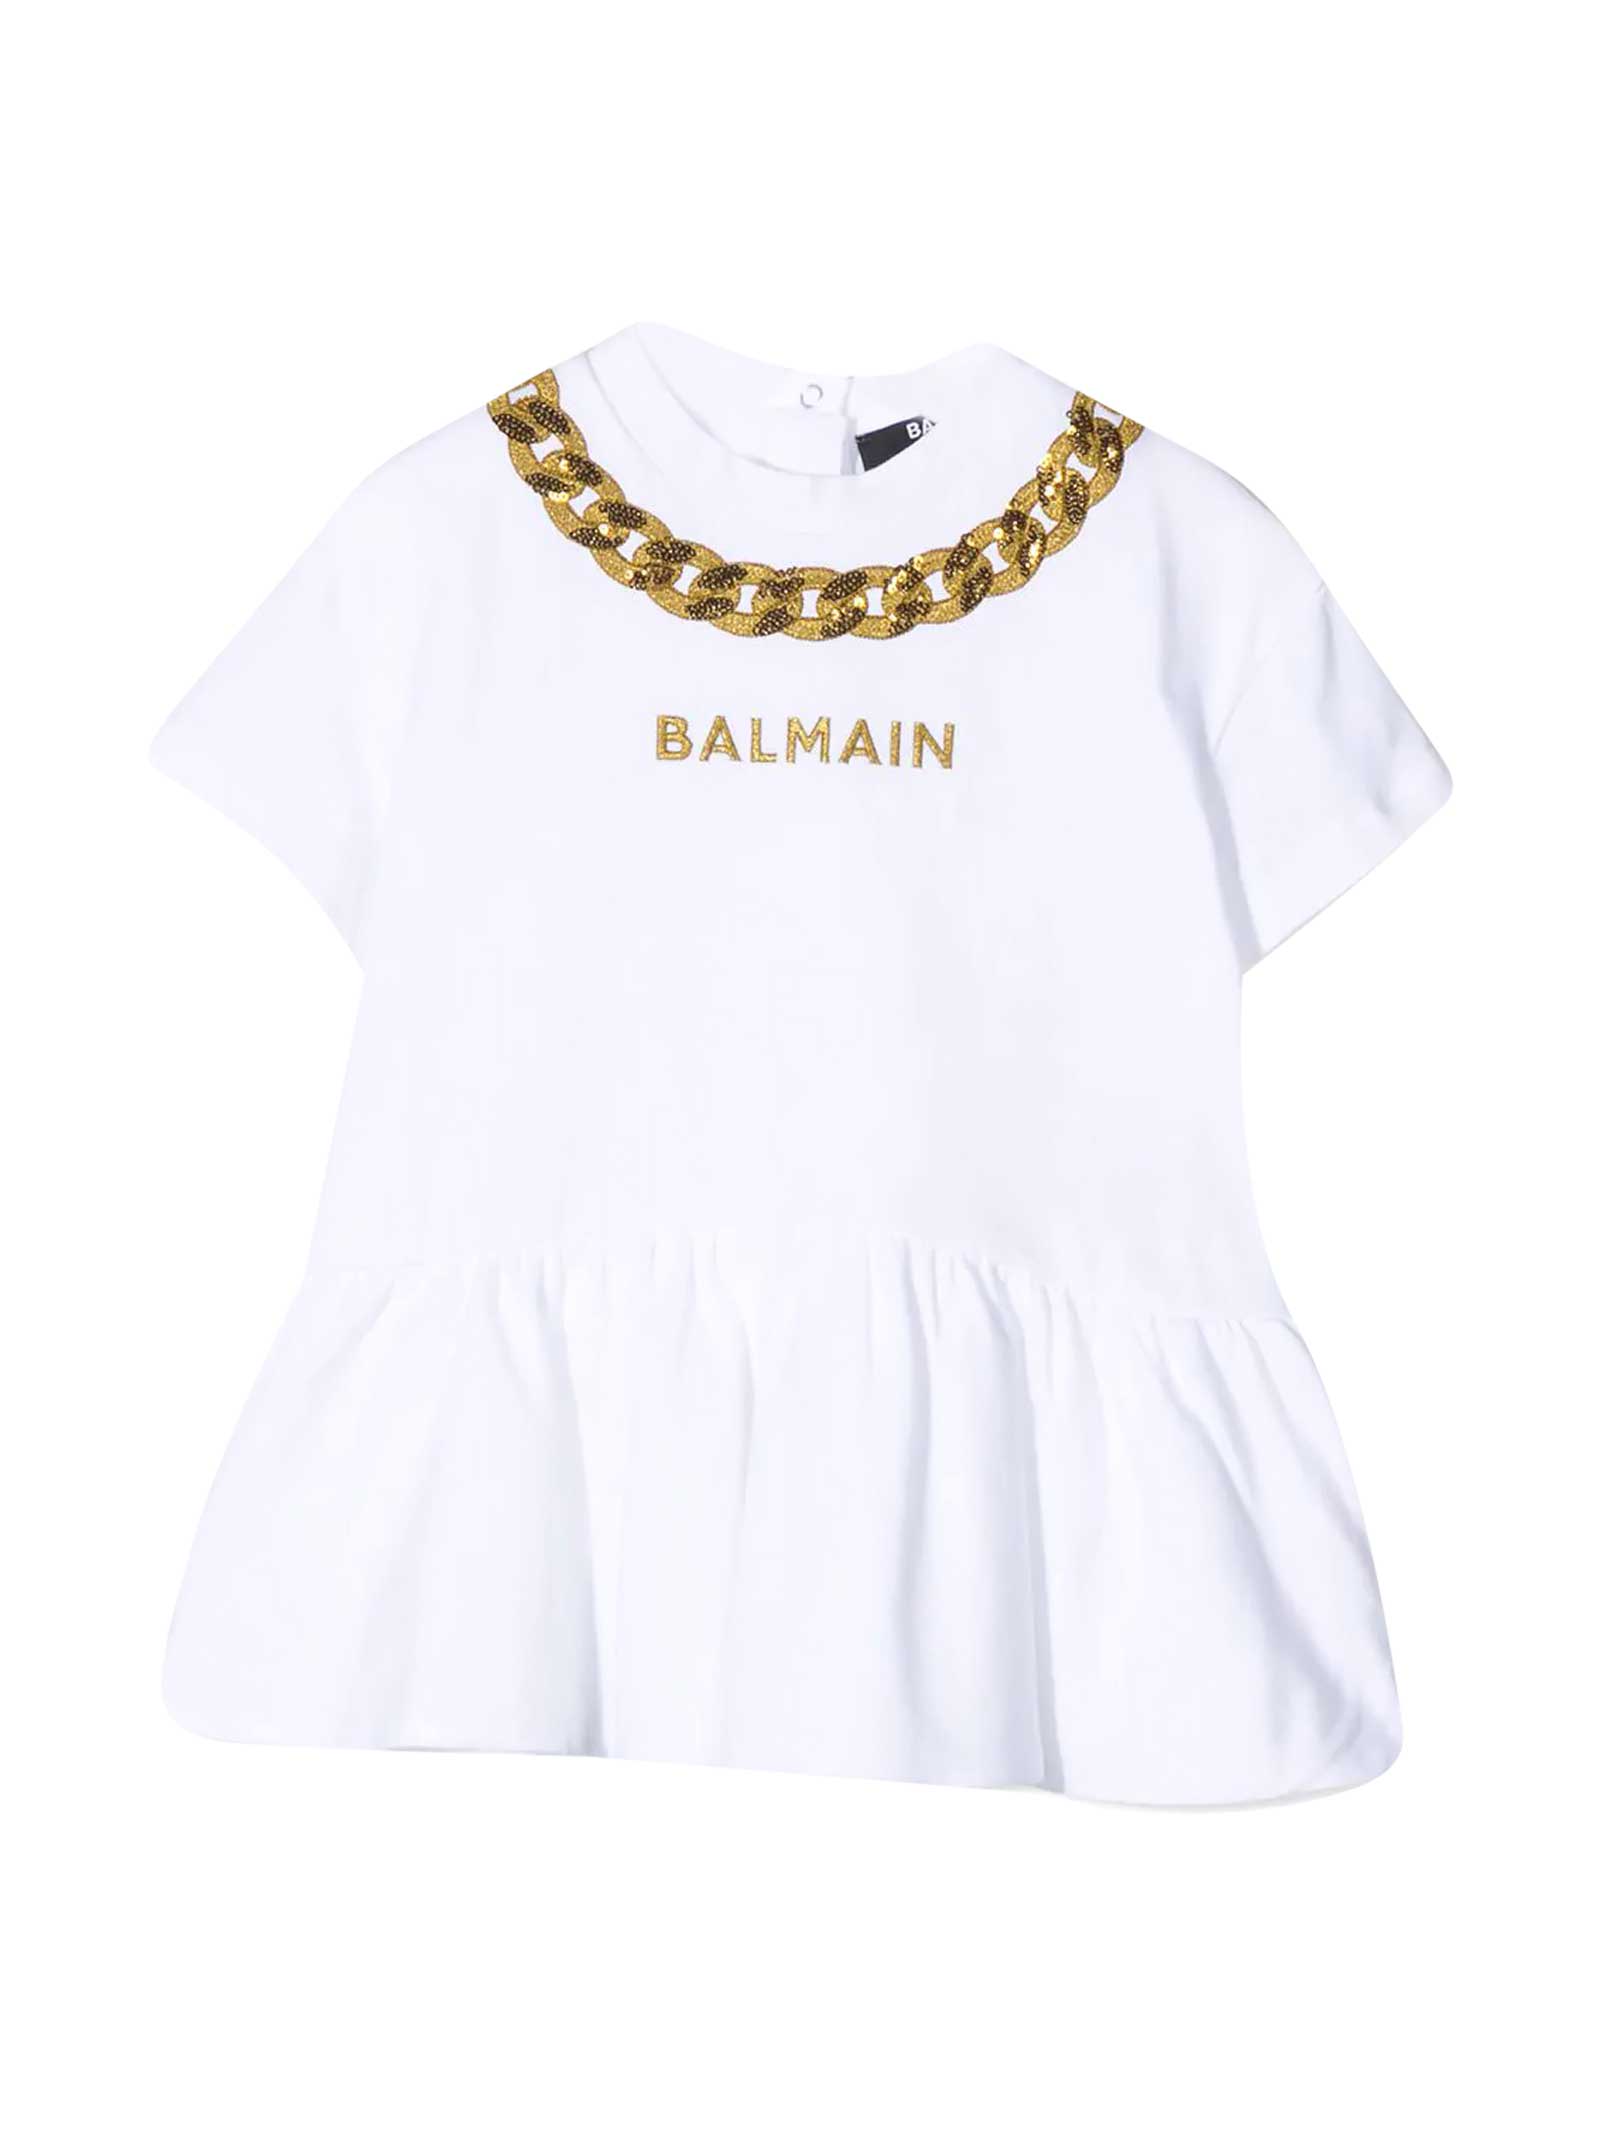 BALMAIN WHITE T-SHIRT DRESS,6O1881OB690 100